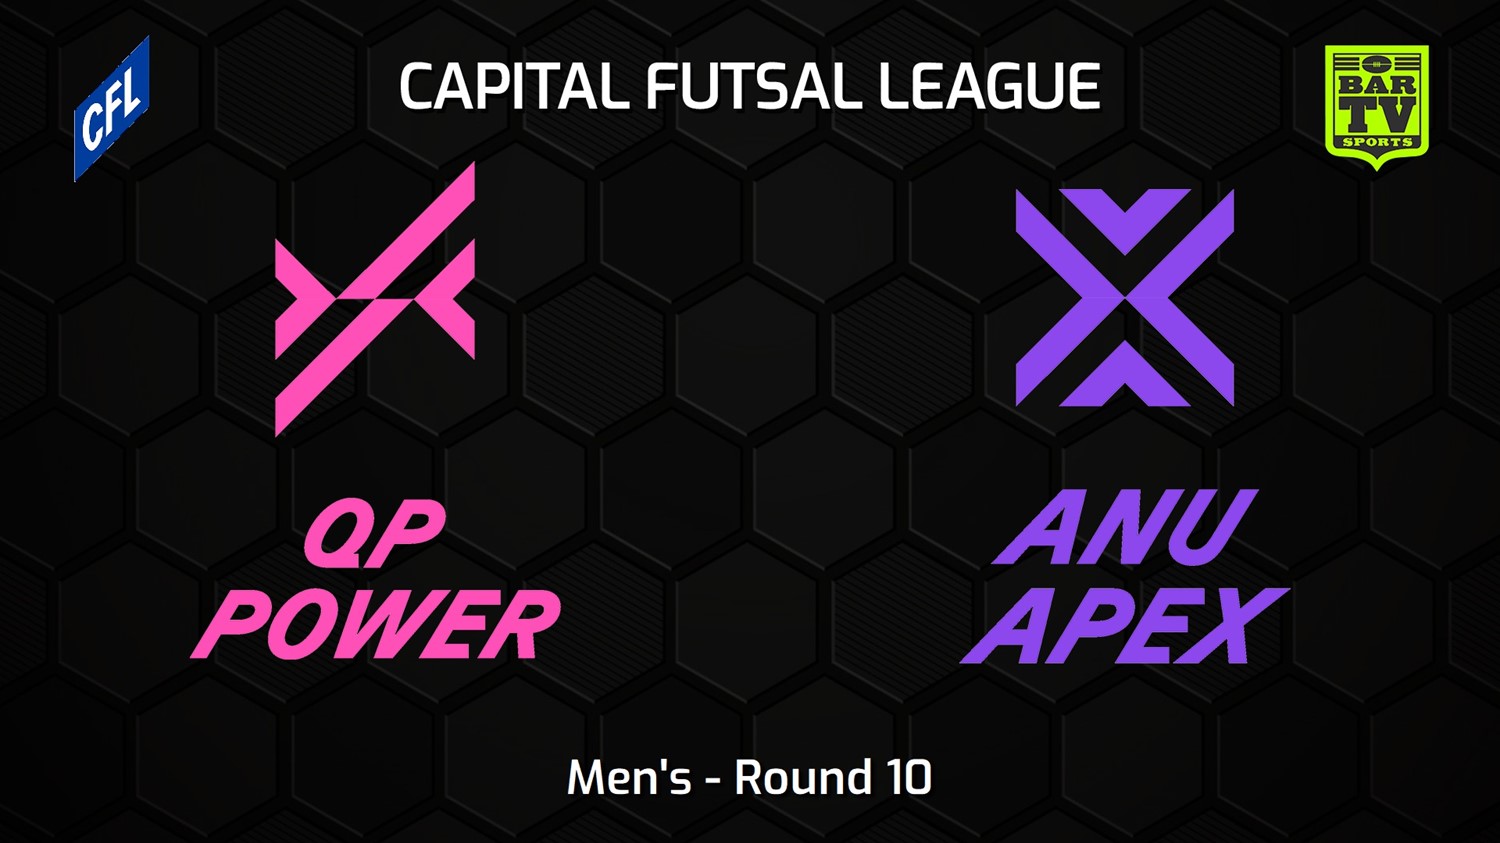 230203-Capital Football Futsal Round 10 - Men's - Queanbeyan-Palerang Power v ANU Apex Minigame Slate Image